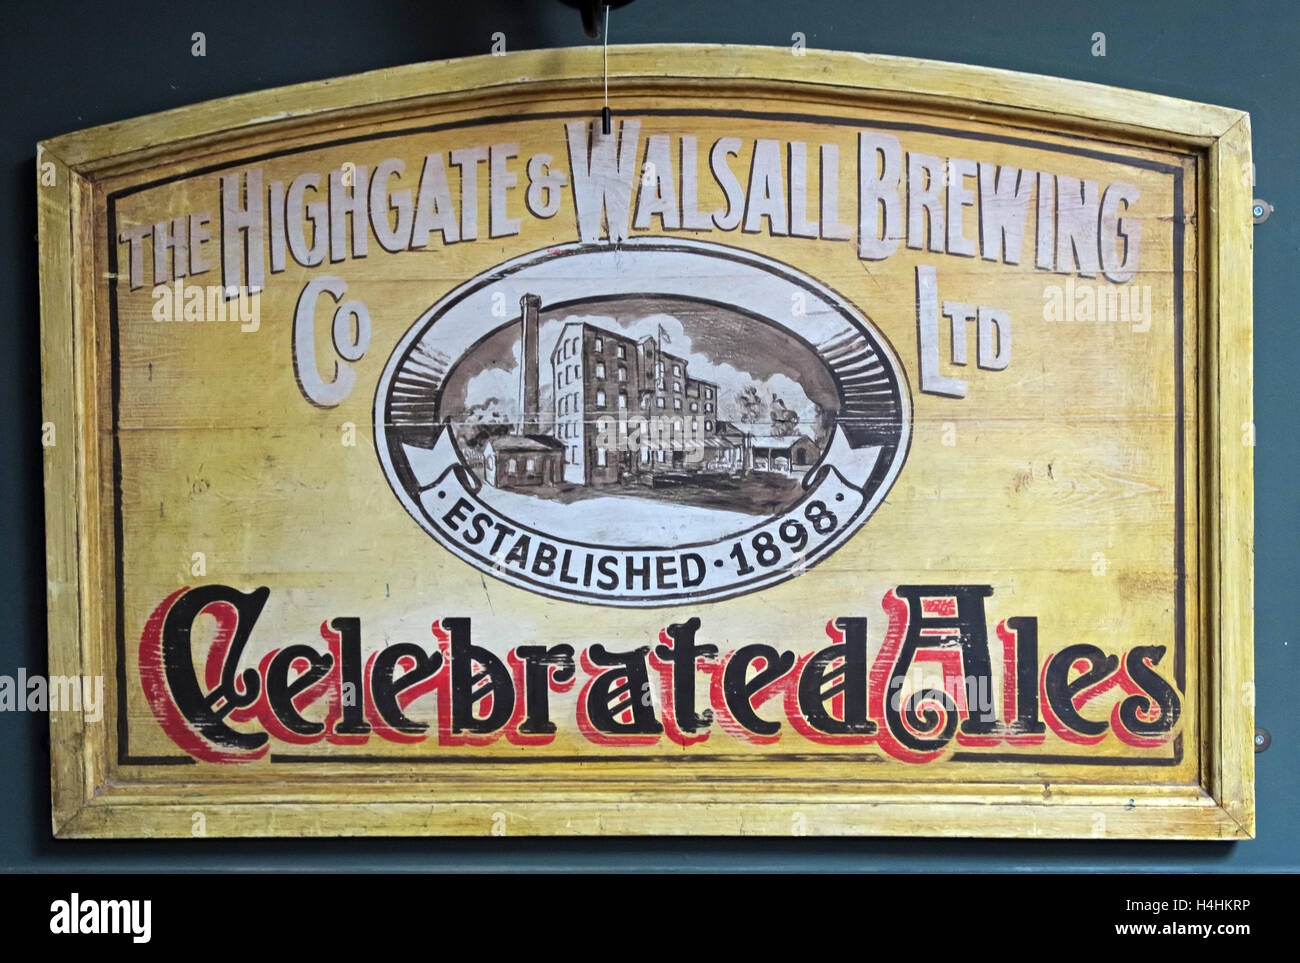 Highgate & Walsall Brewing Co Ltd,célébré Ales,West Midlands, Angleterre, Royaume-Uni Banque D'Images